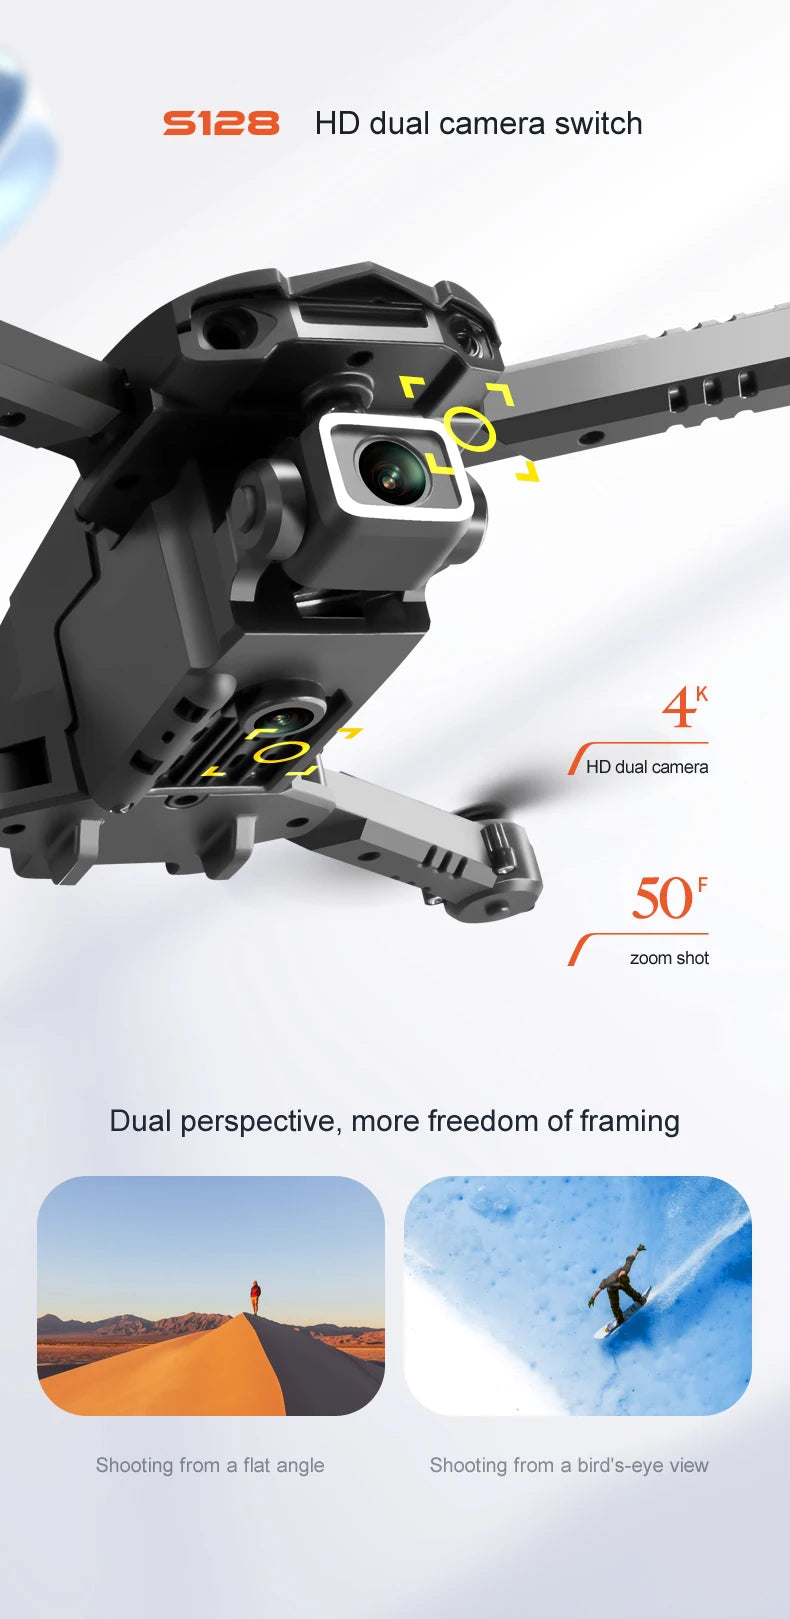 XYRC S128 Mini Drone, dual camera switch 4k hd dual camera 50f zoom shot